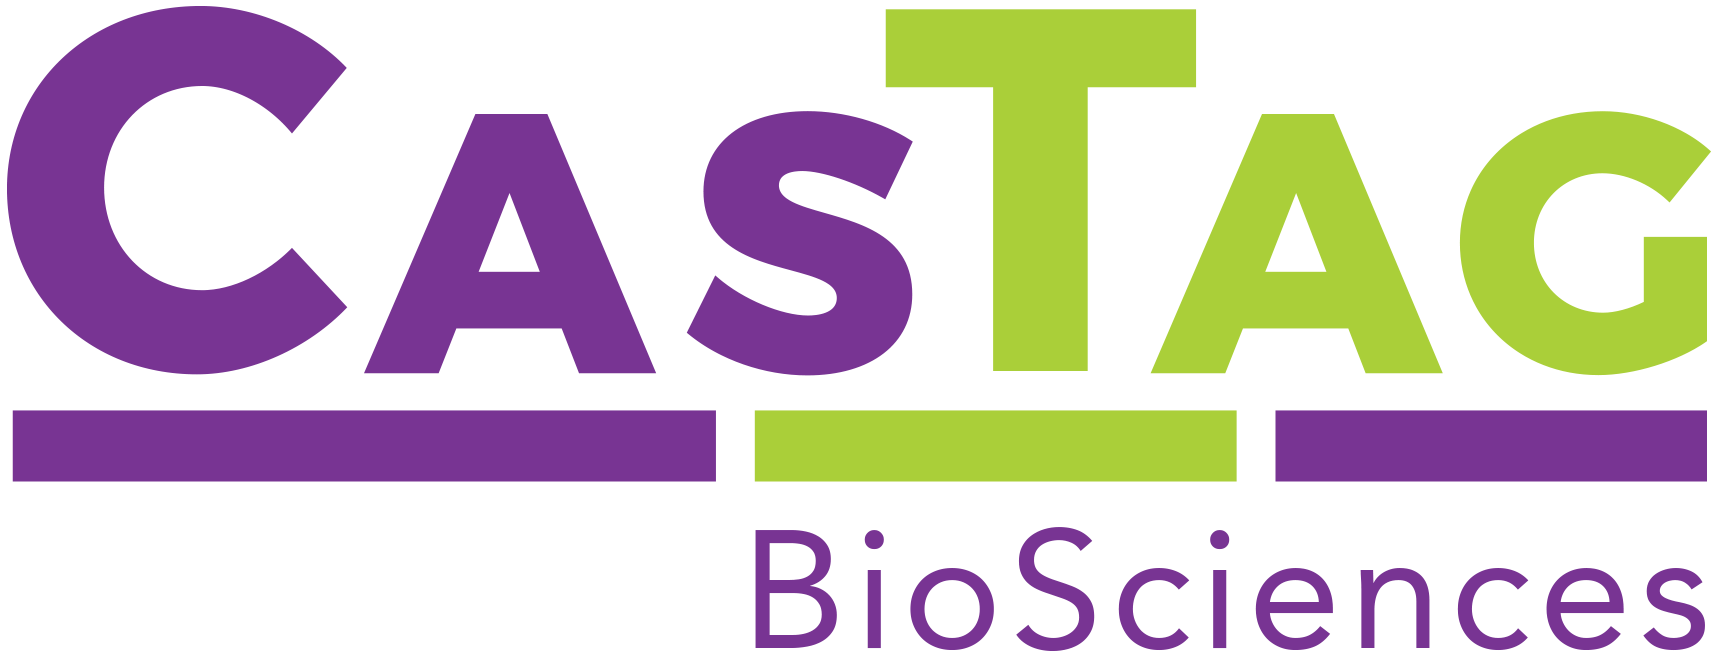 CasTag biosciences